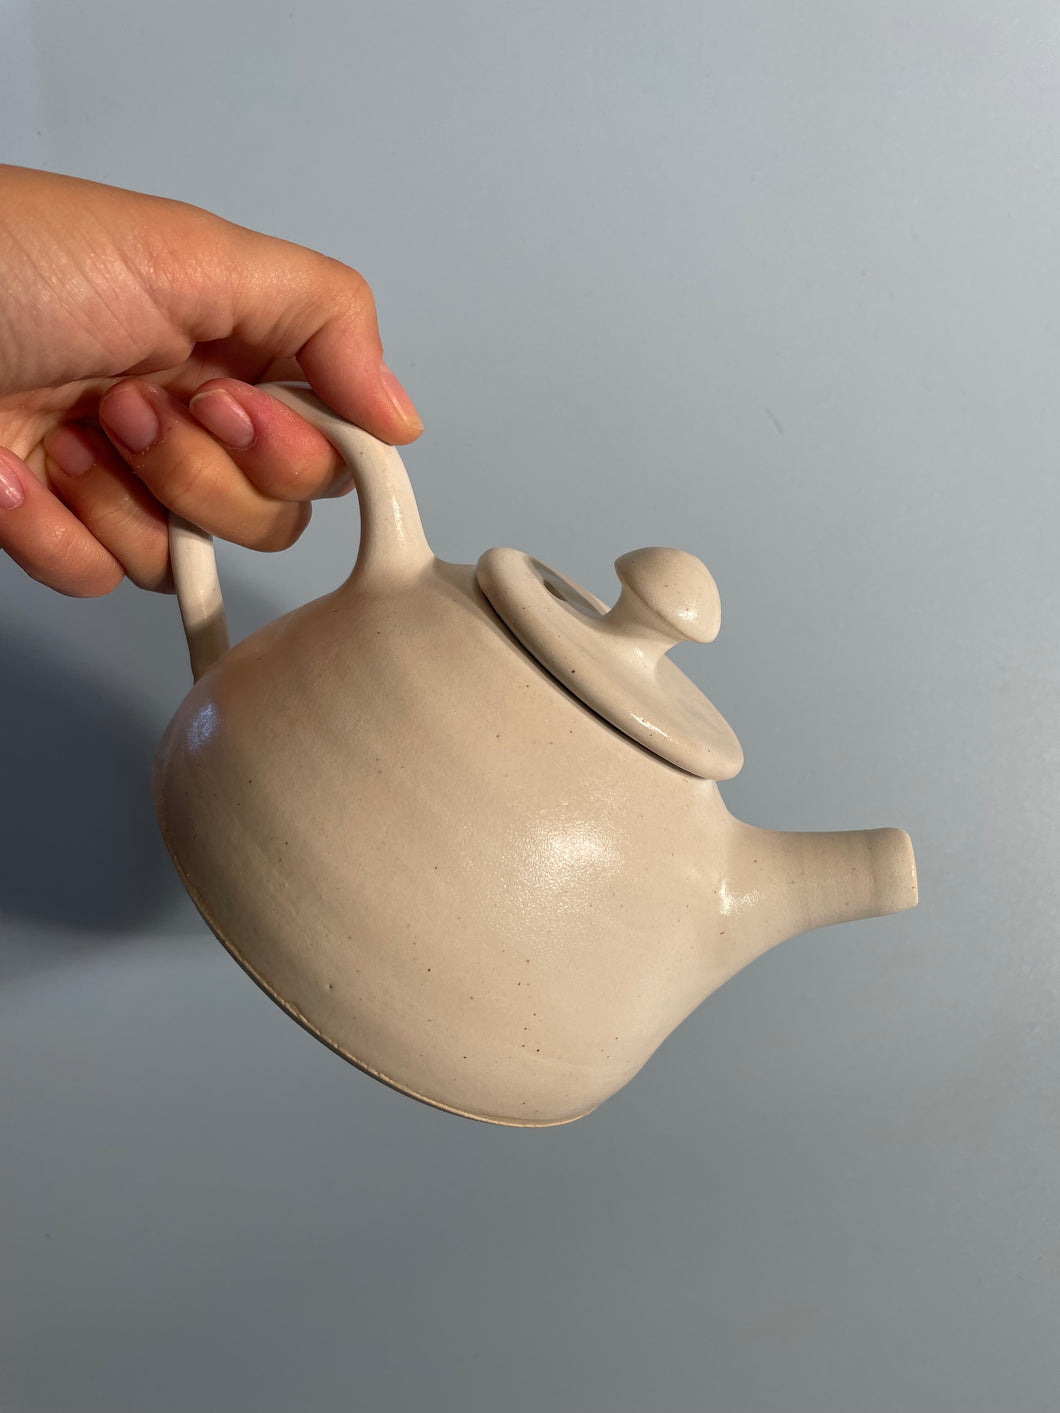 Small Teapot - matte stone white